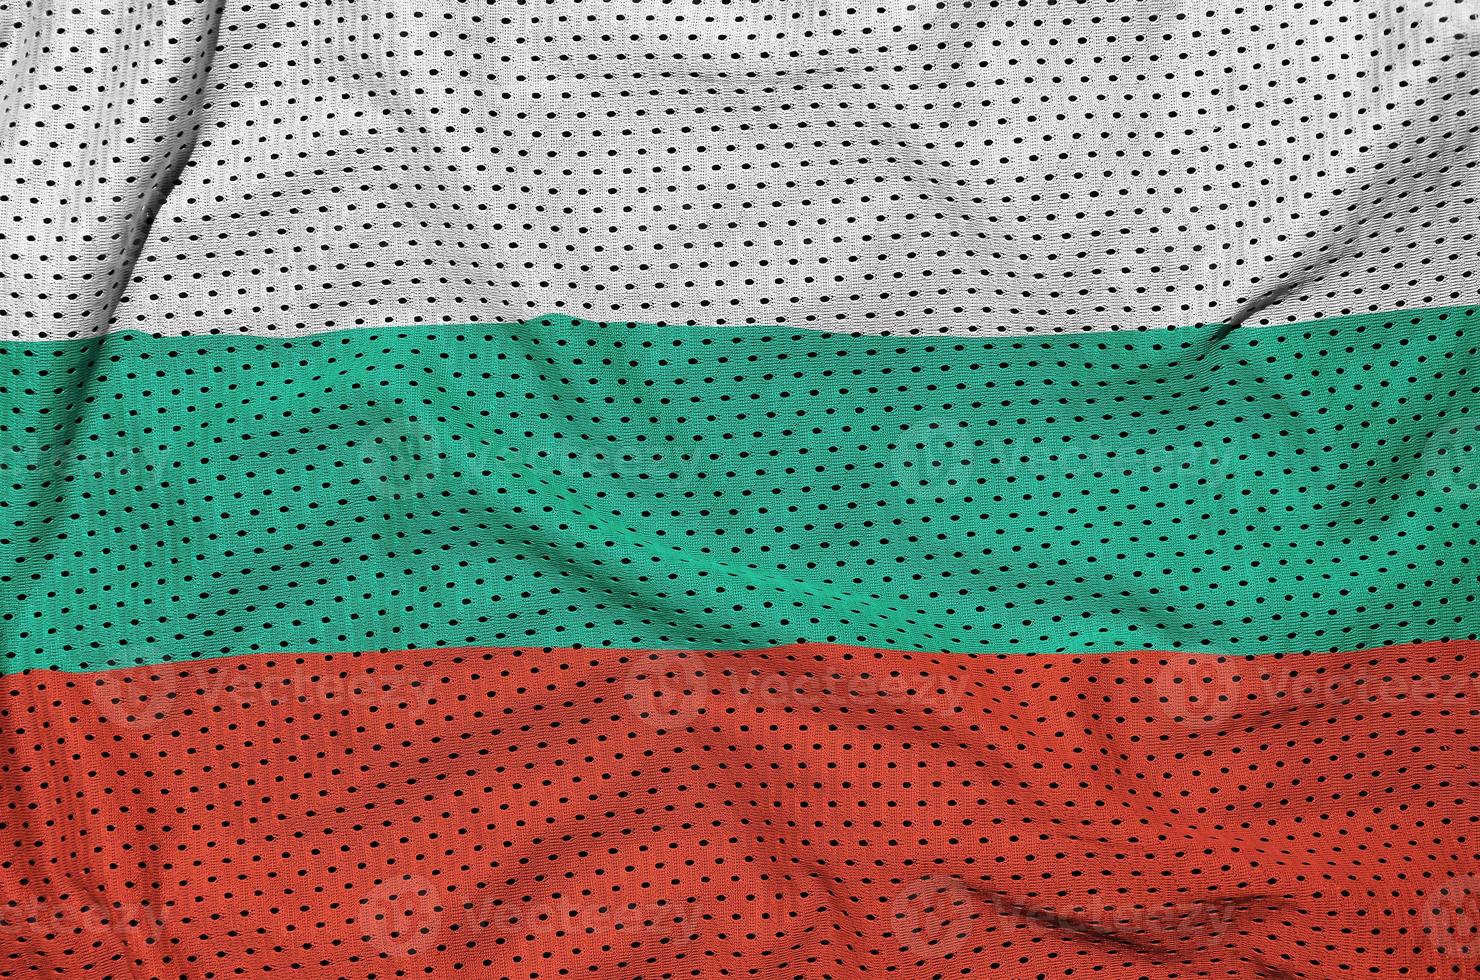 Bulgaria flag printed on a polyester nylon sportswear mesh fabri photo